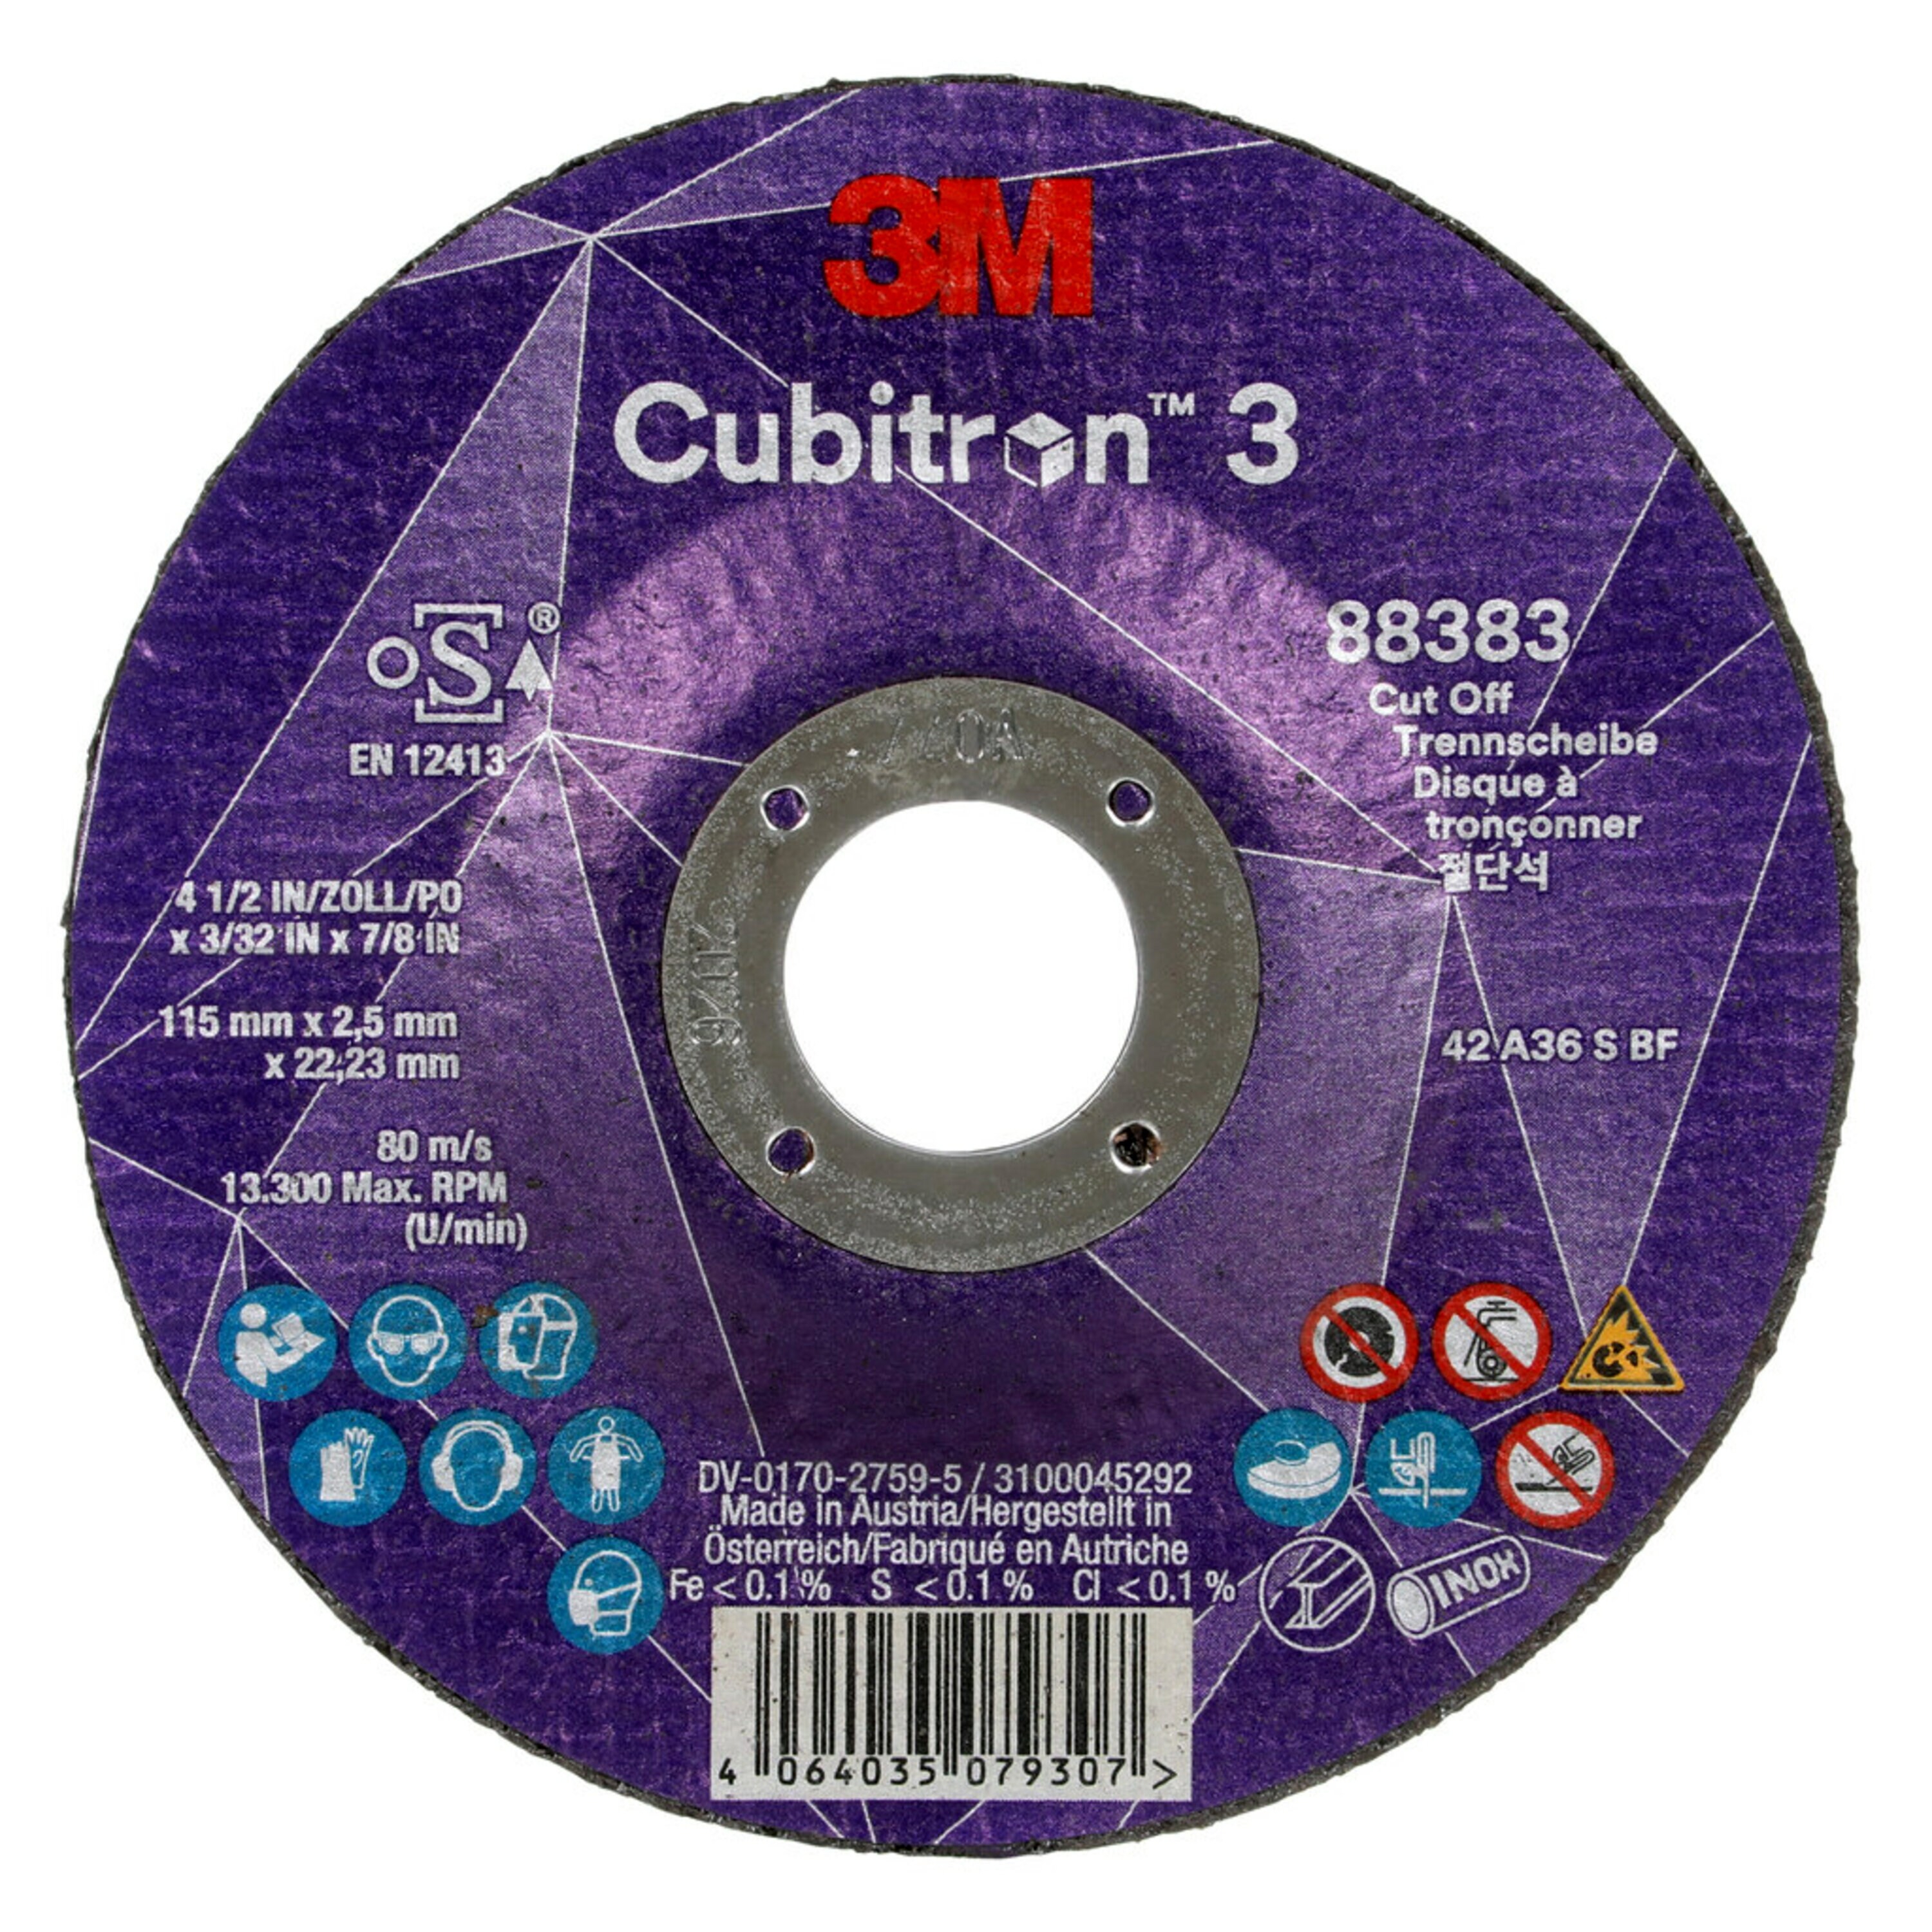 3M Cubitron 3 cut-off wheel, 115 mm, 2.5 mm, 22.23 mm, 36 , type 42 #89573